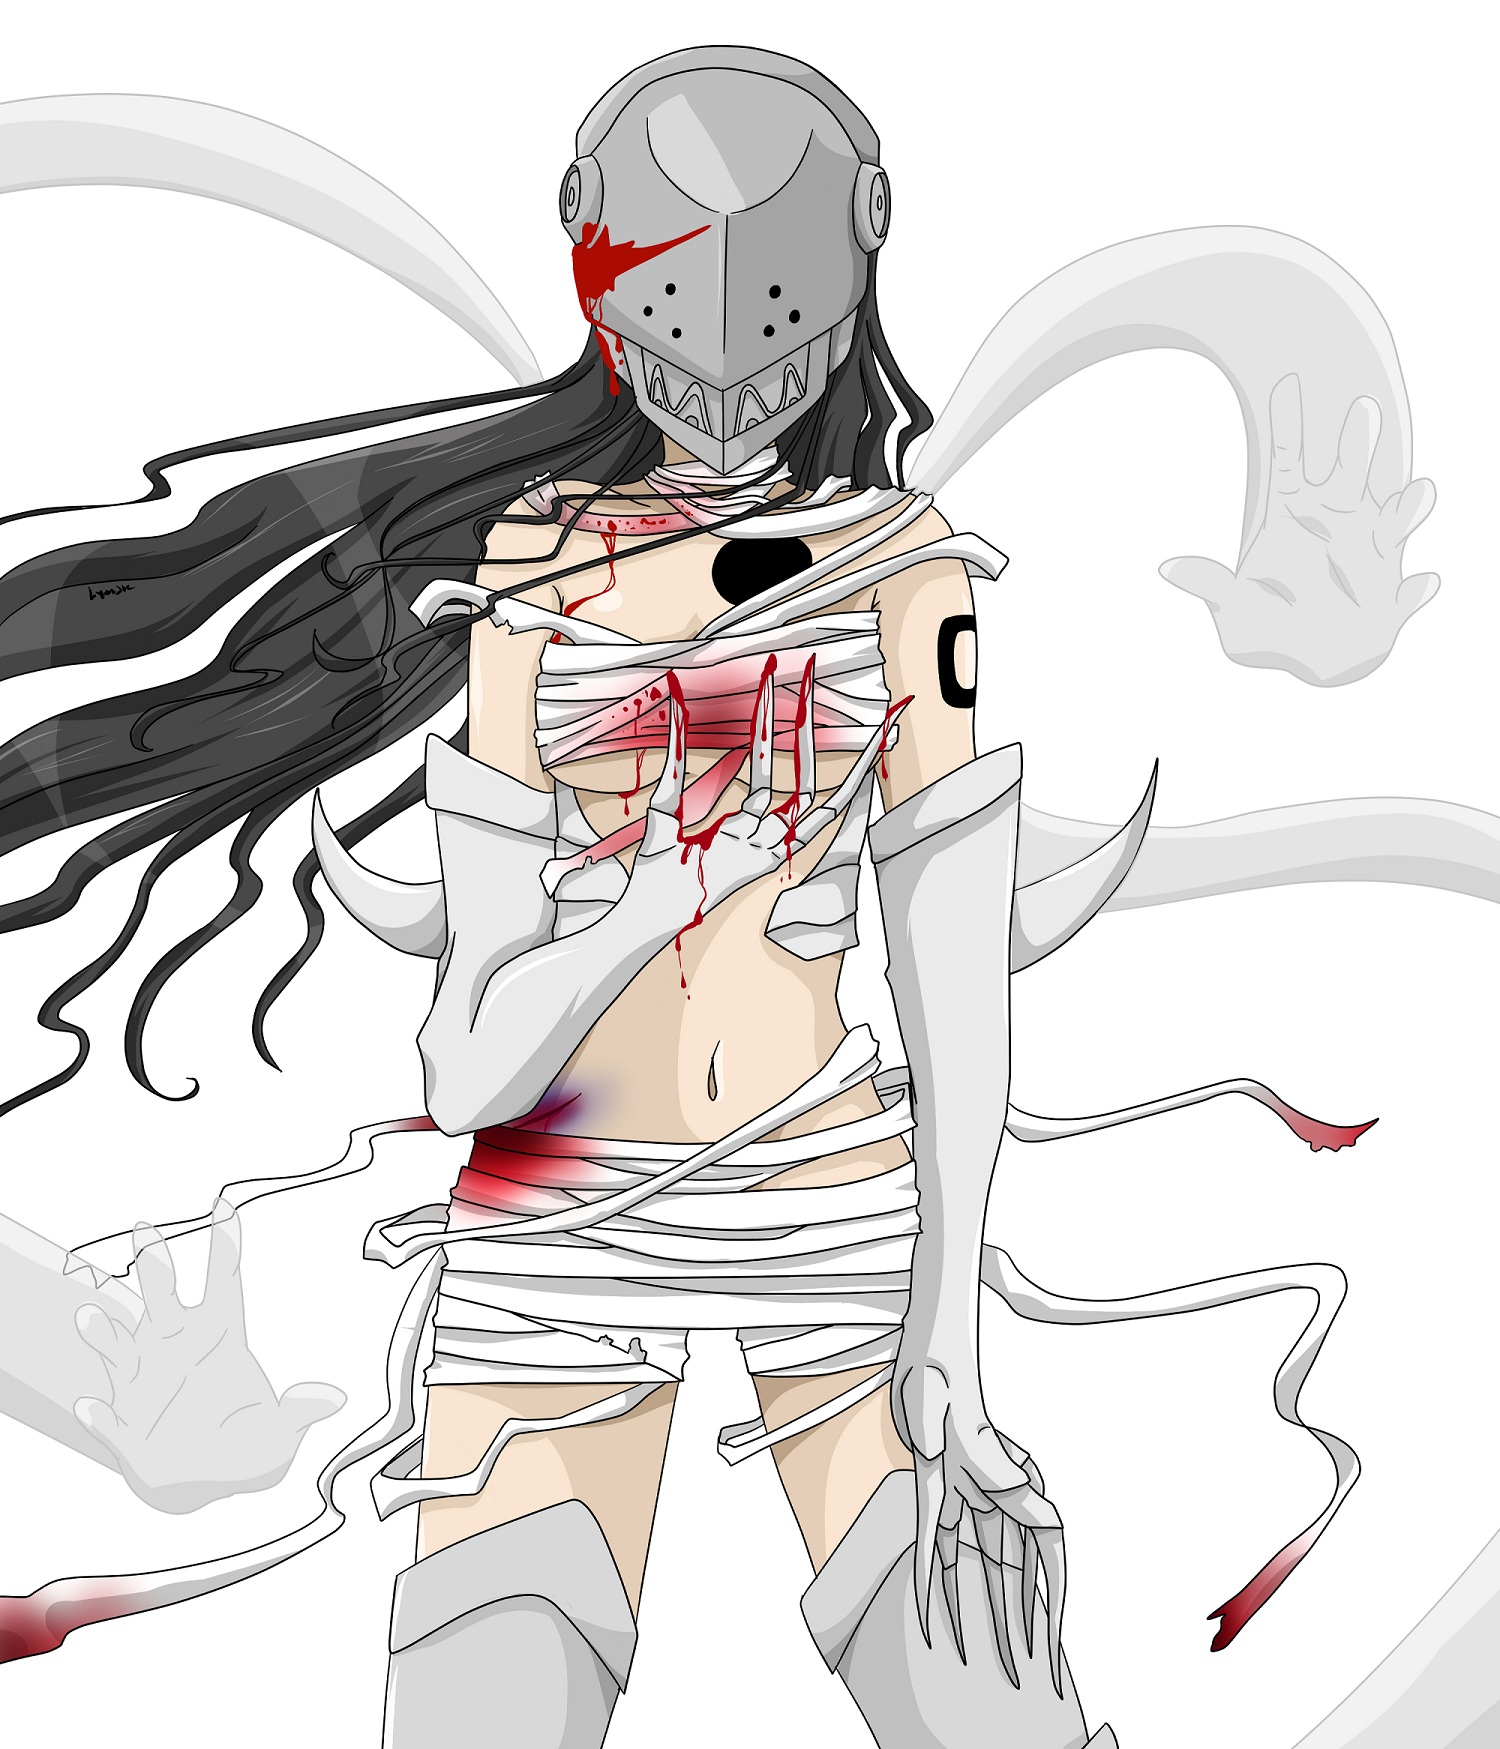 Vasto Lorde - anime style by Vinn47 on DeviantArt